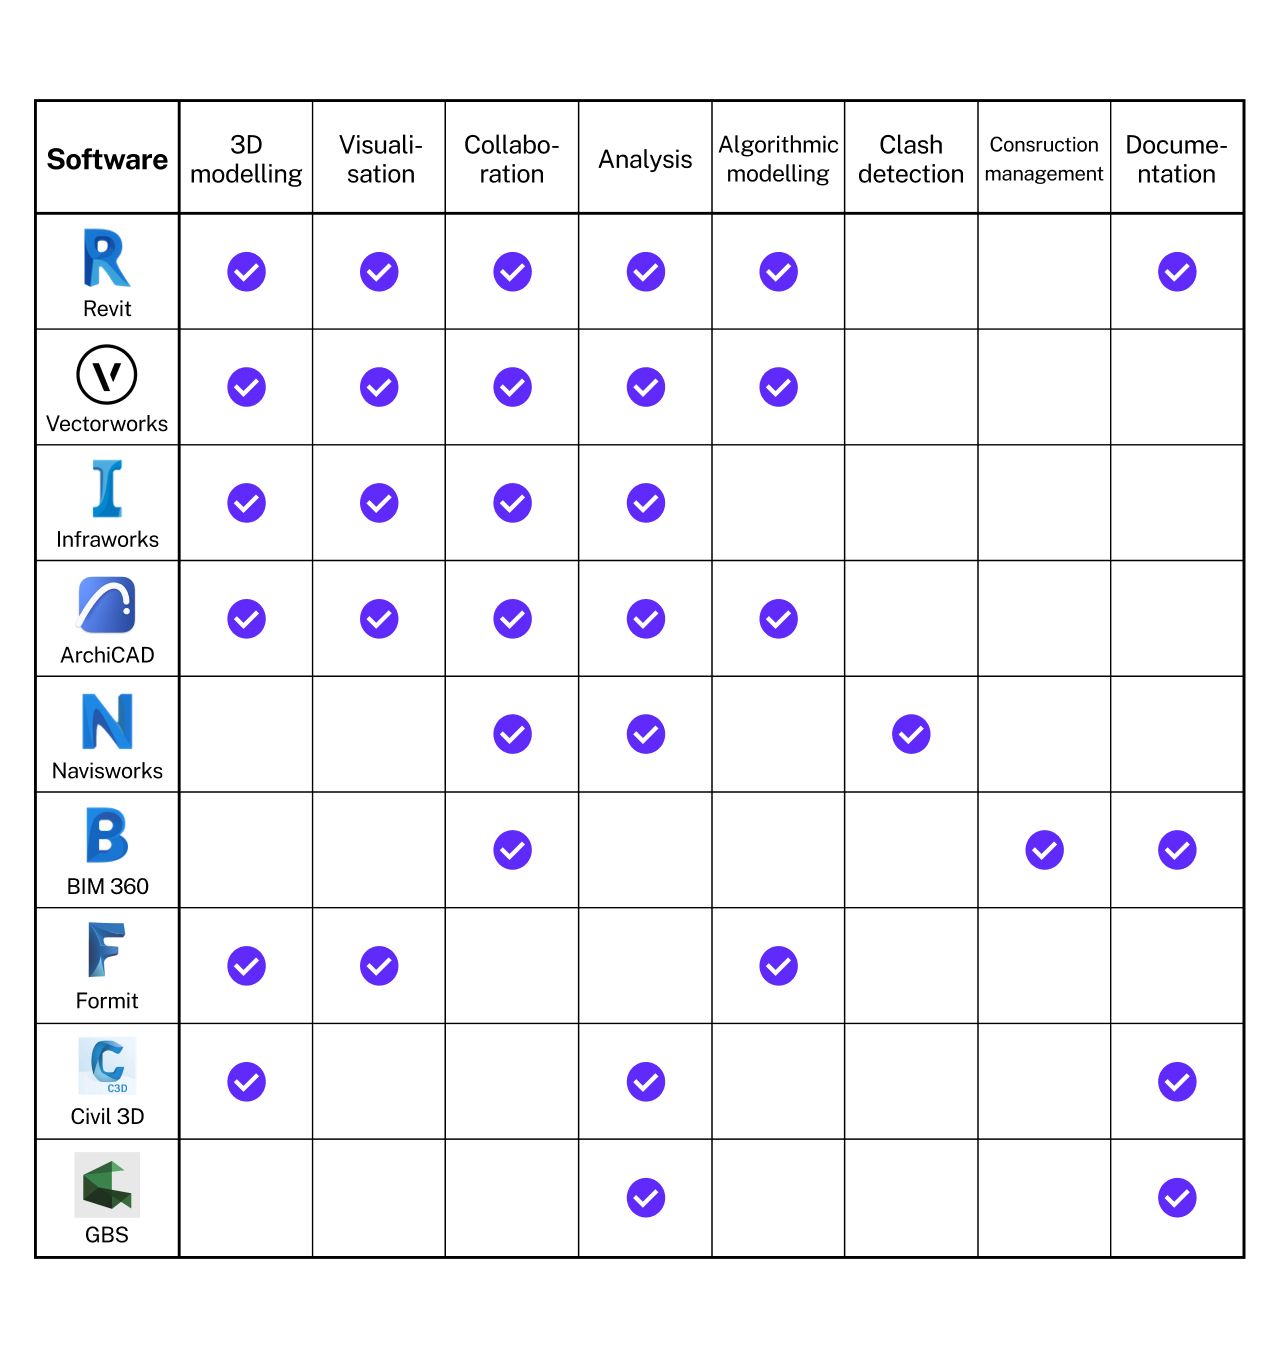 Feature matrix for popular BIM software and tools